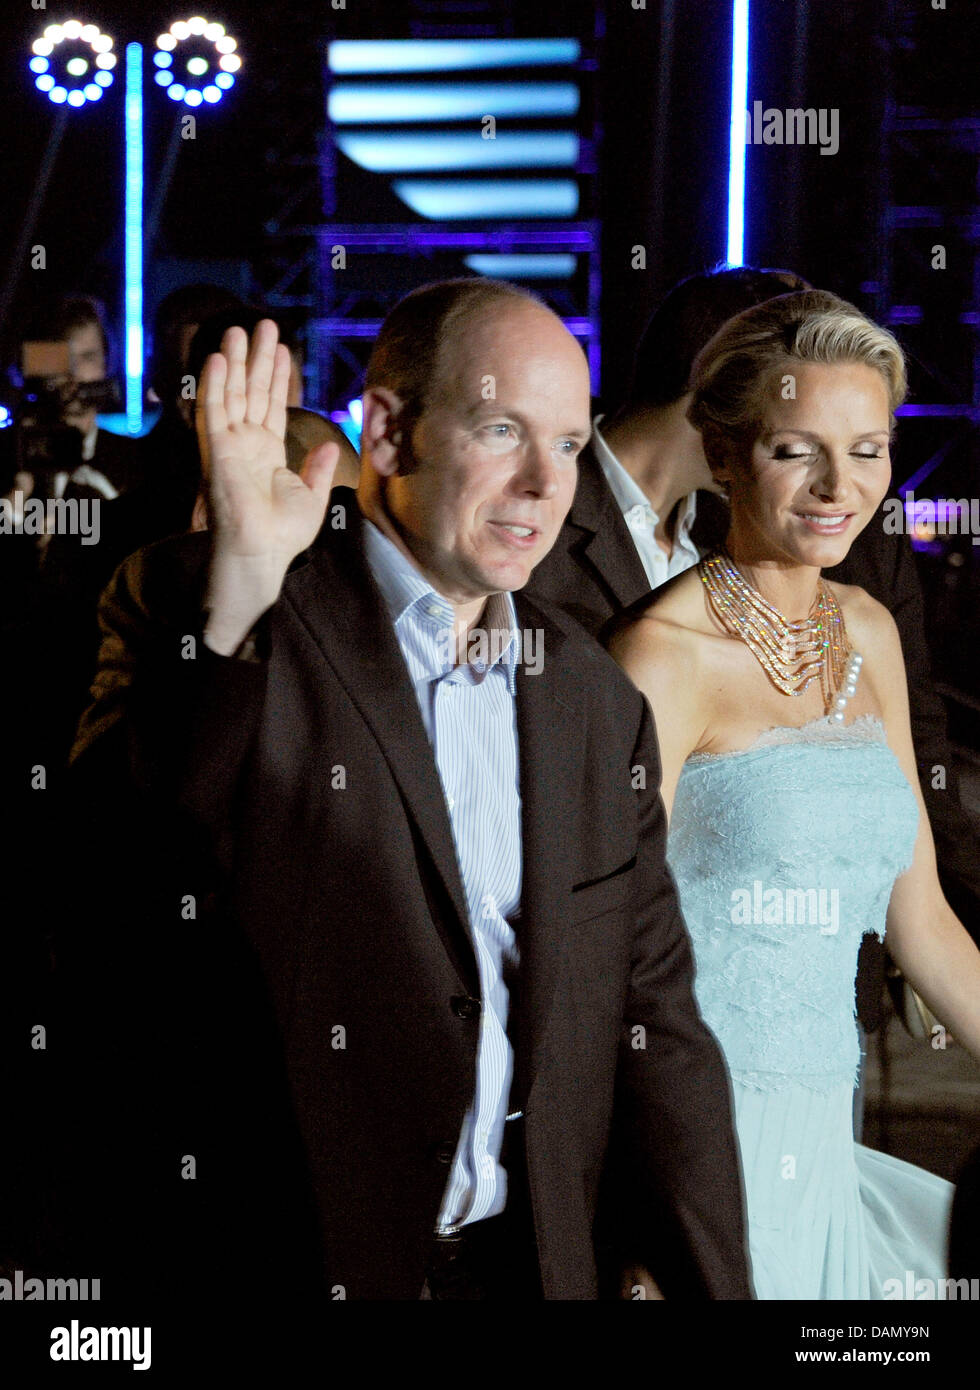 The newly-wed couple Prince Albert II of Monaco and his wife Princess Stock Photo: 58238145 - Alamy